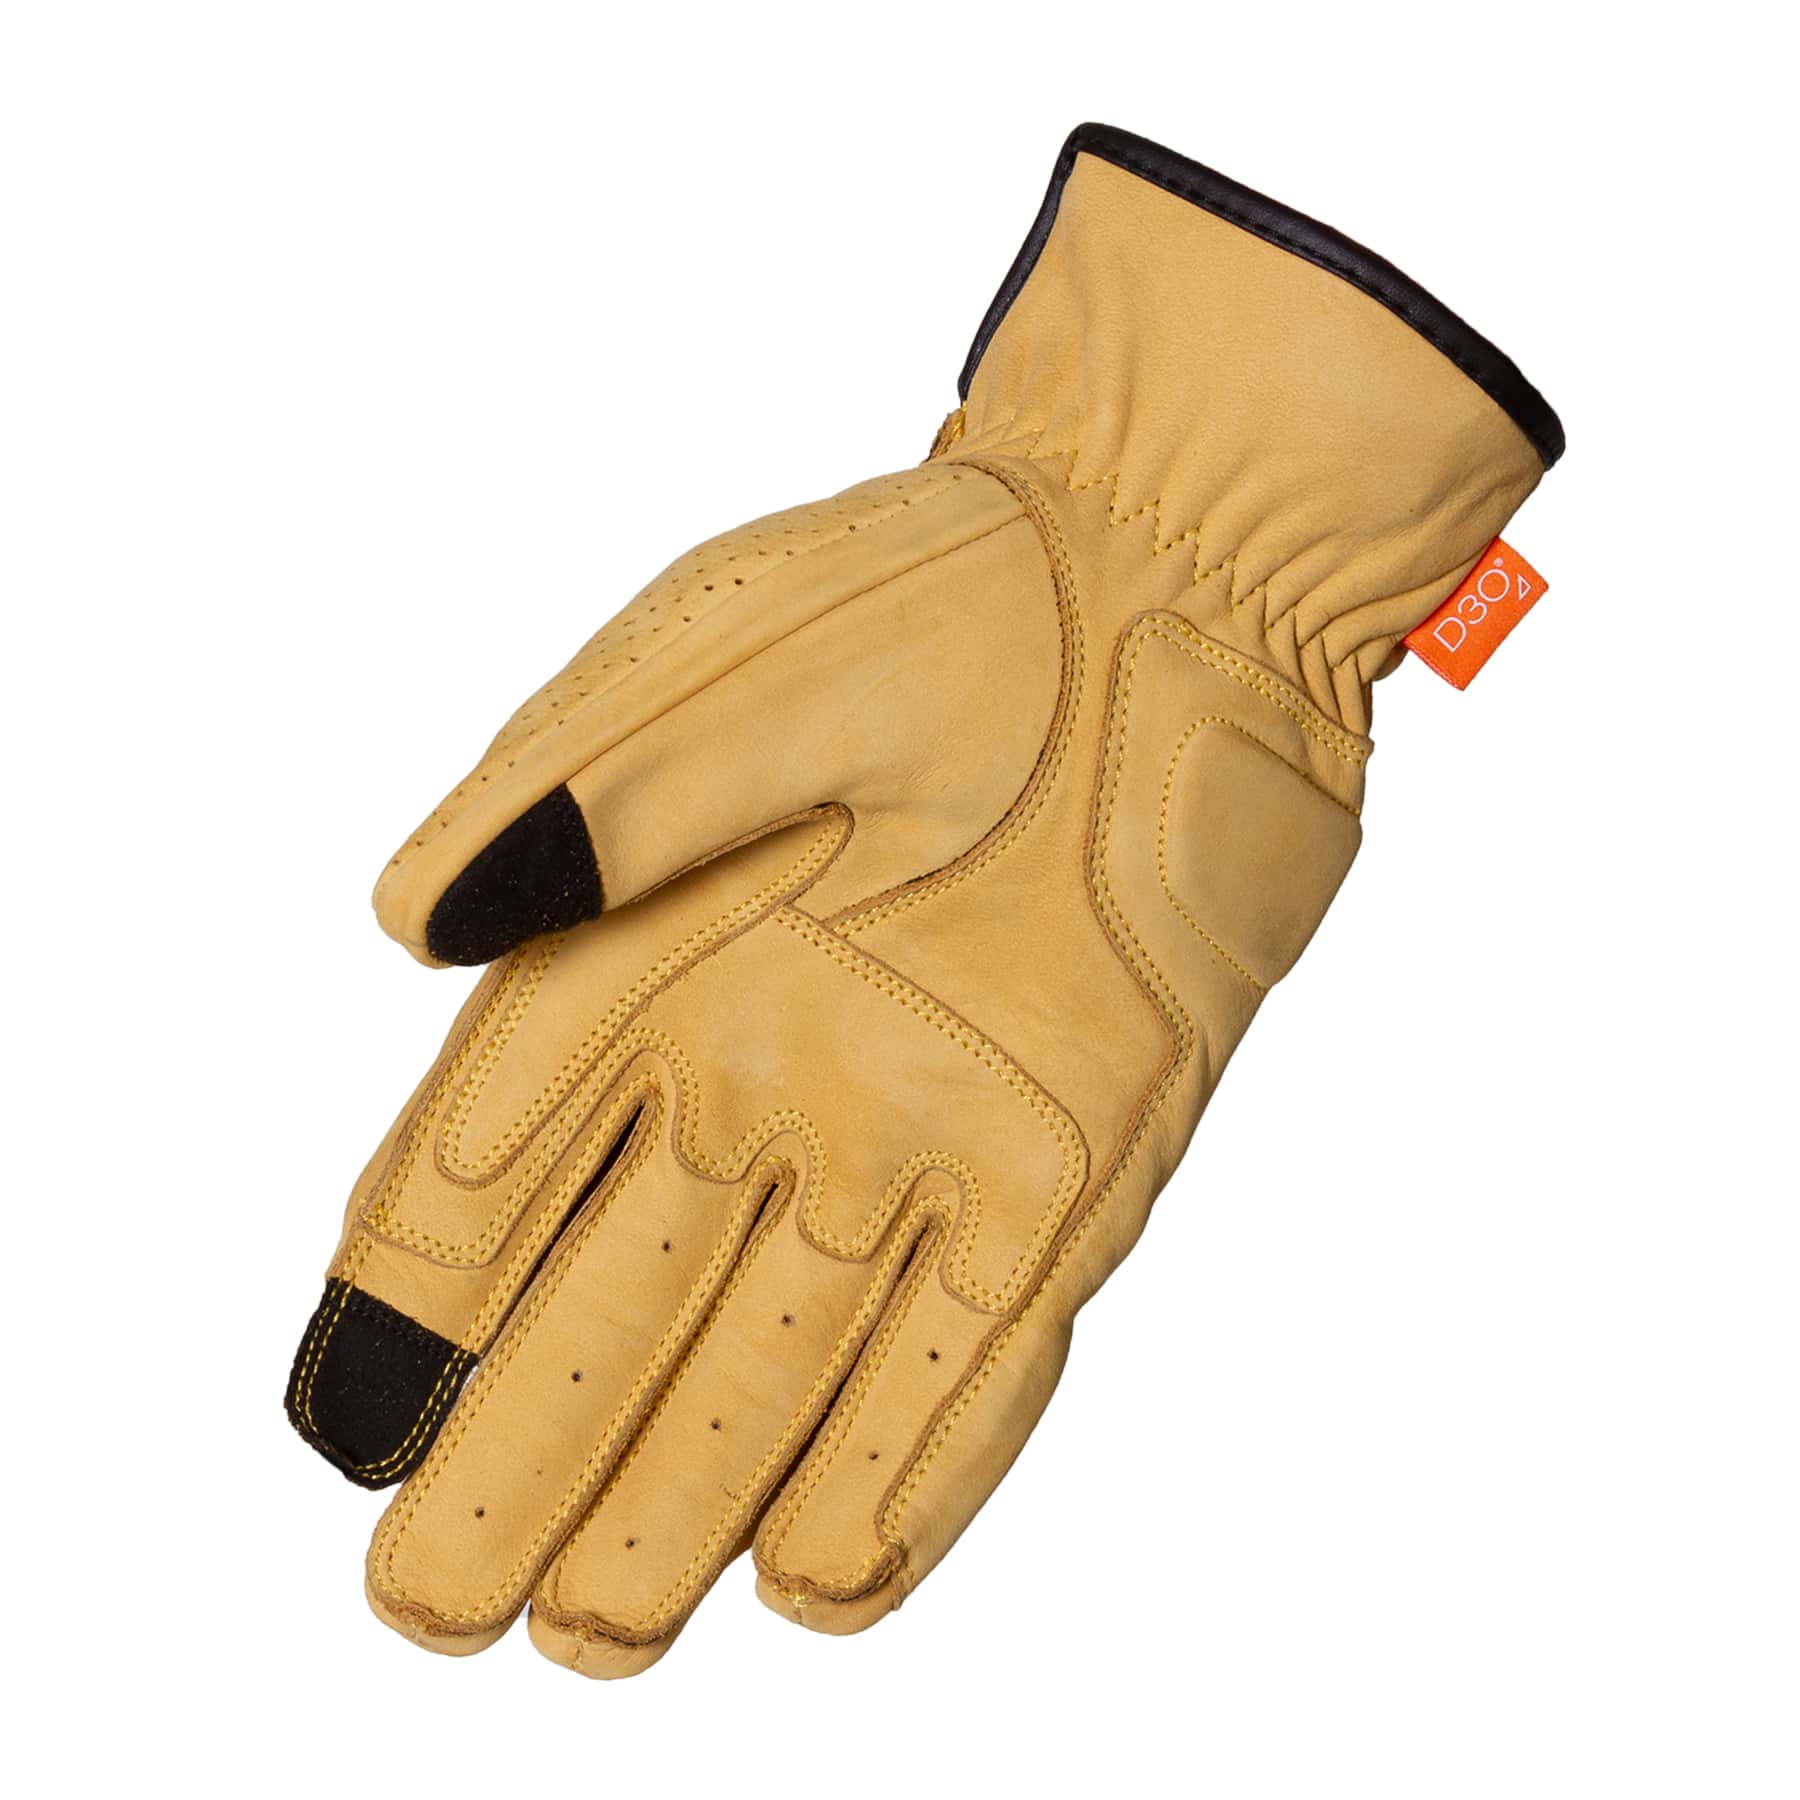 Merlin Leigh Gloves in sand